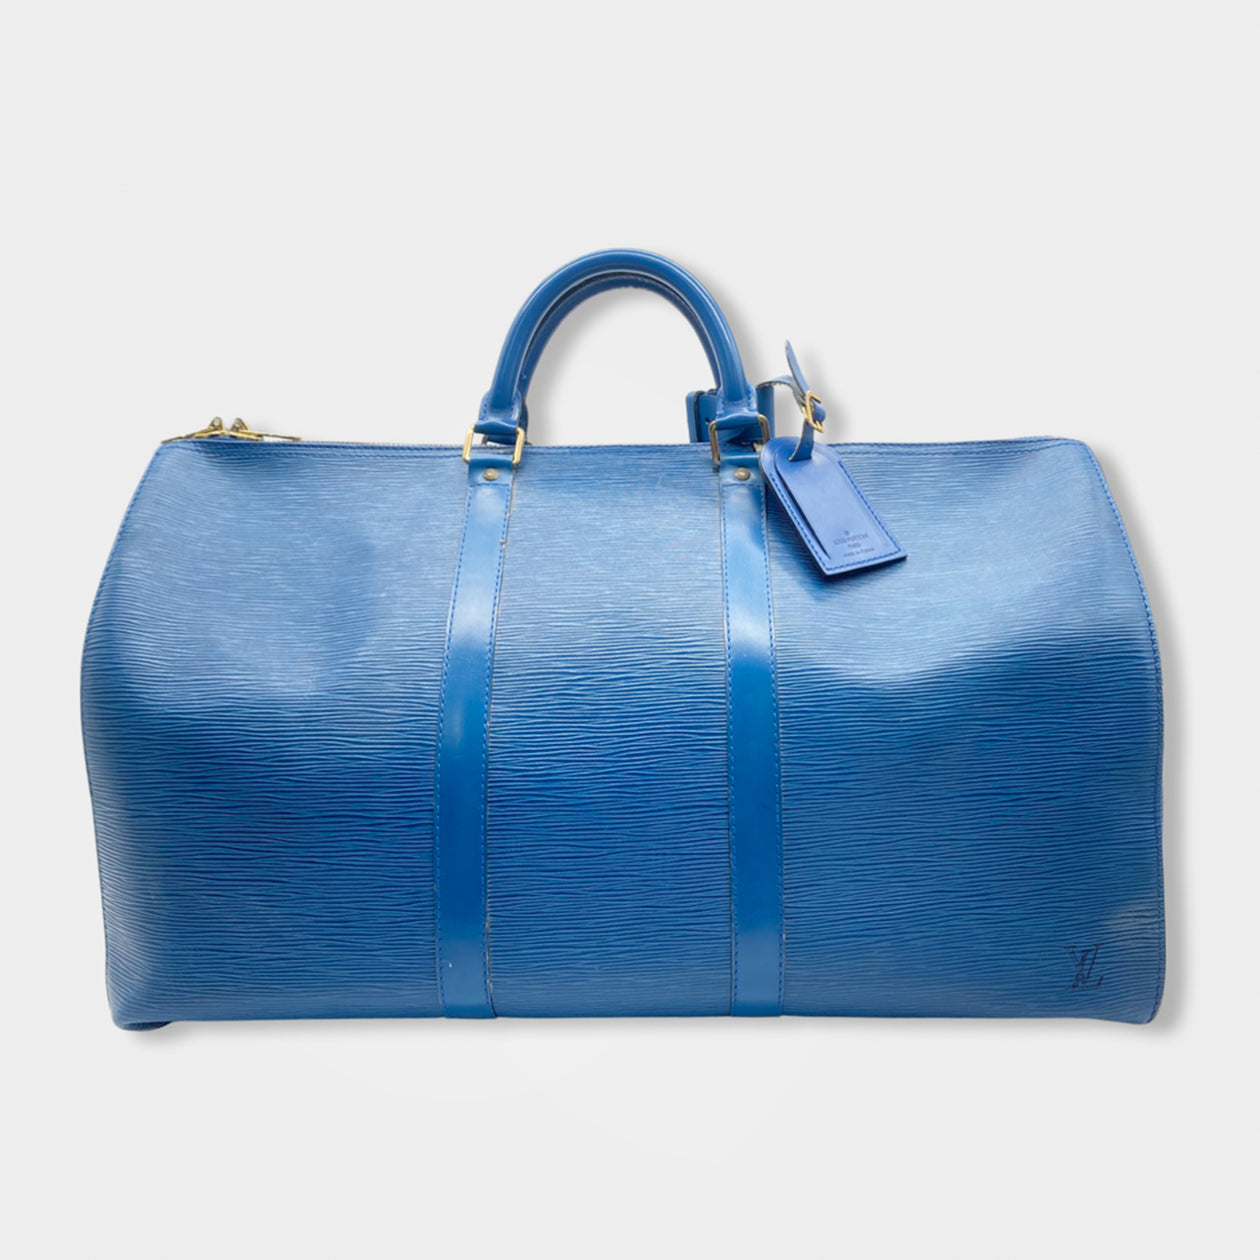 louis vuitton blue duffle bag